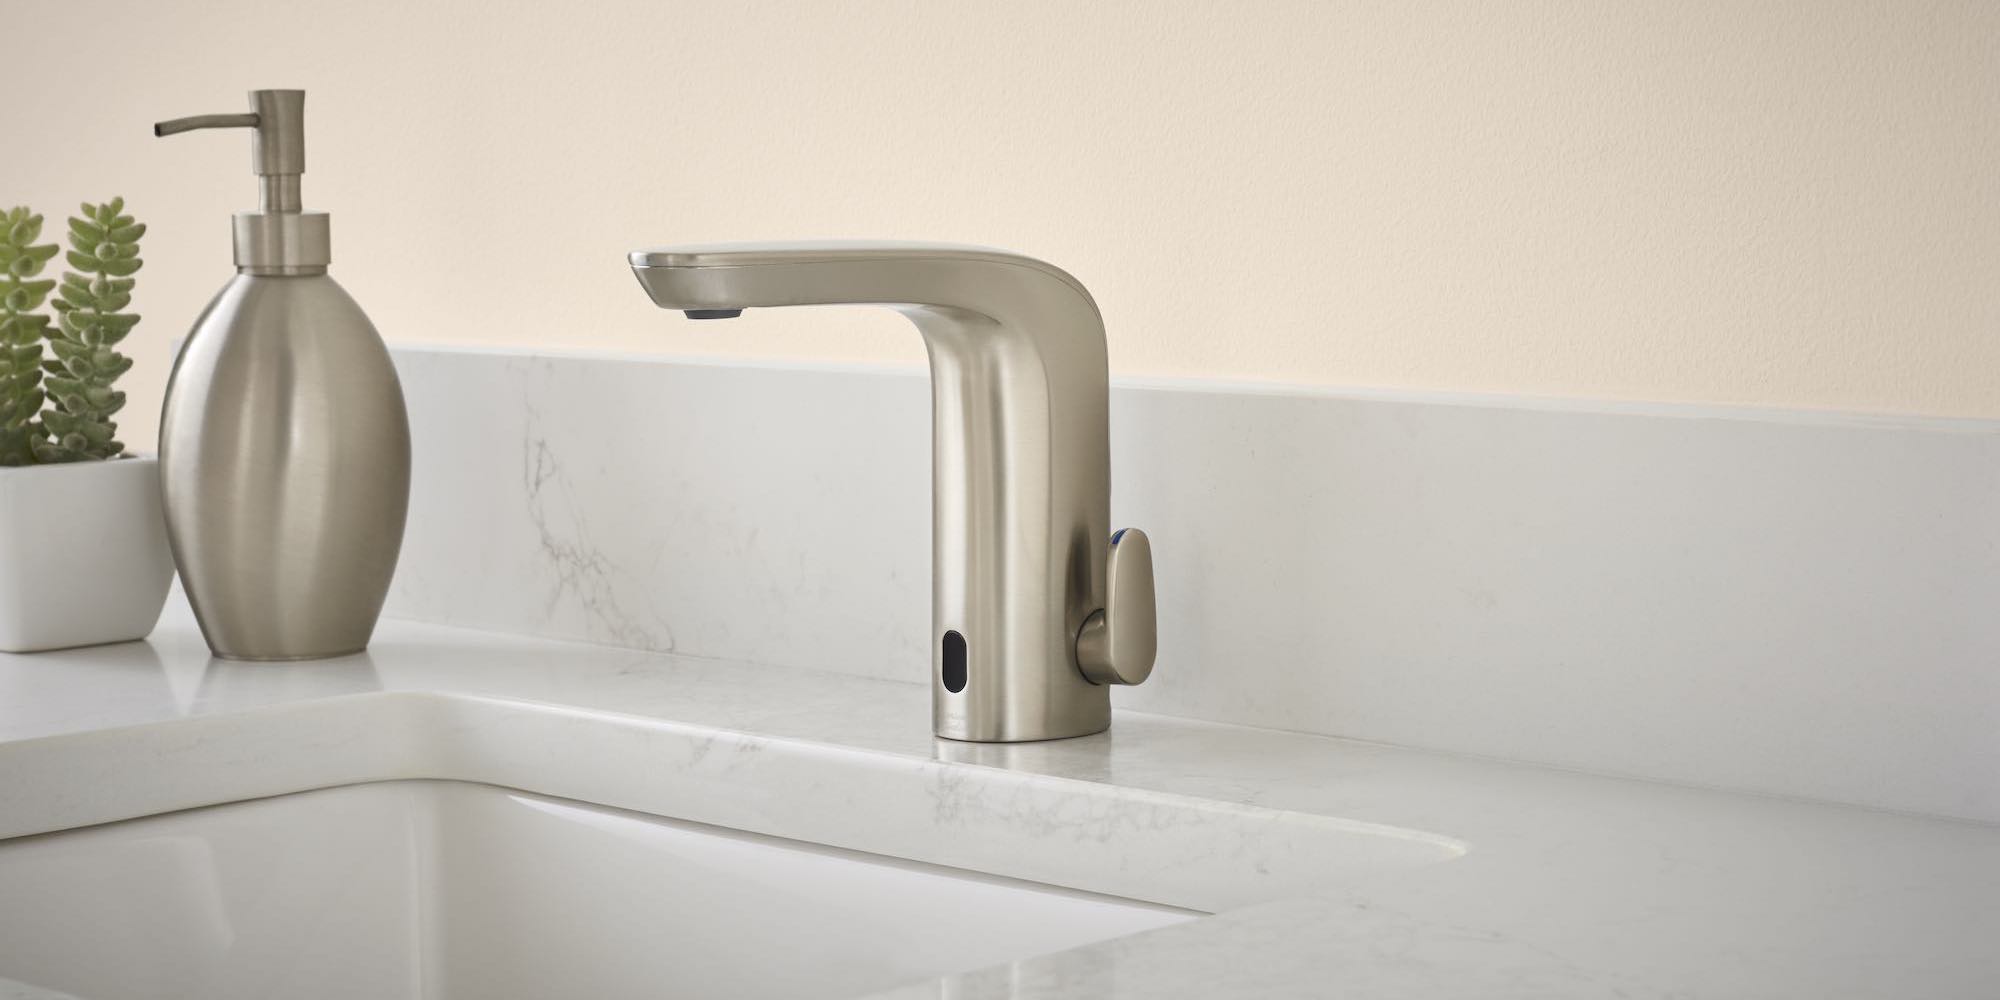 Touchless golden faucet/sink